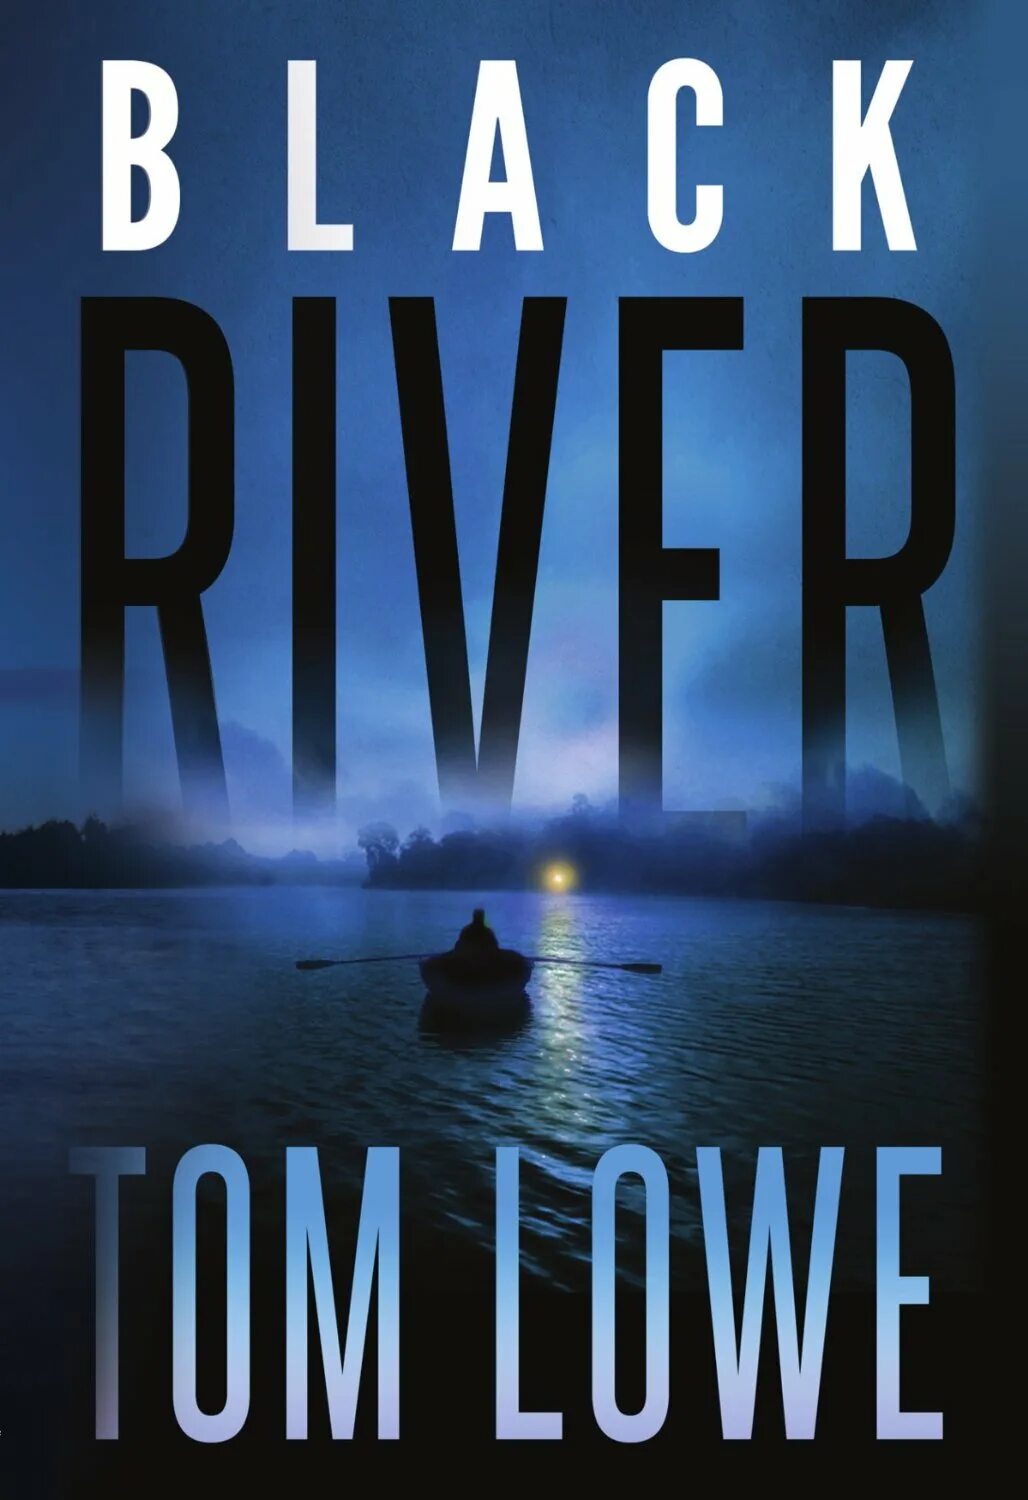 Глубокие реки книга. Блэк Ривер. Loewe книга. Книга писателя Блэк. Шона River.